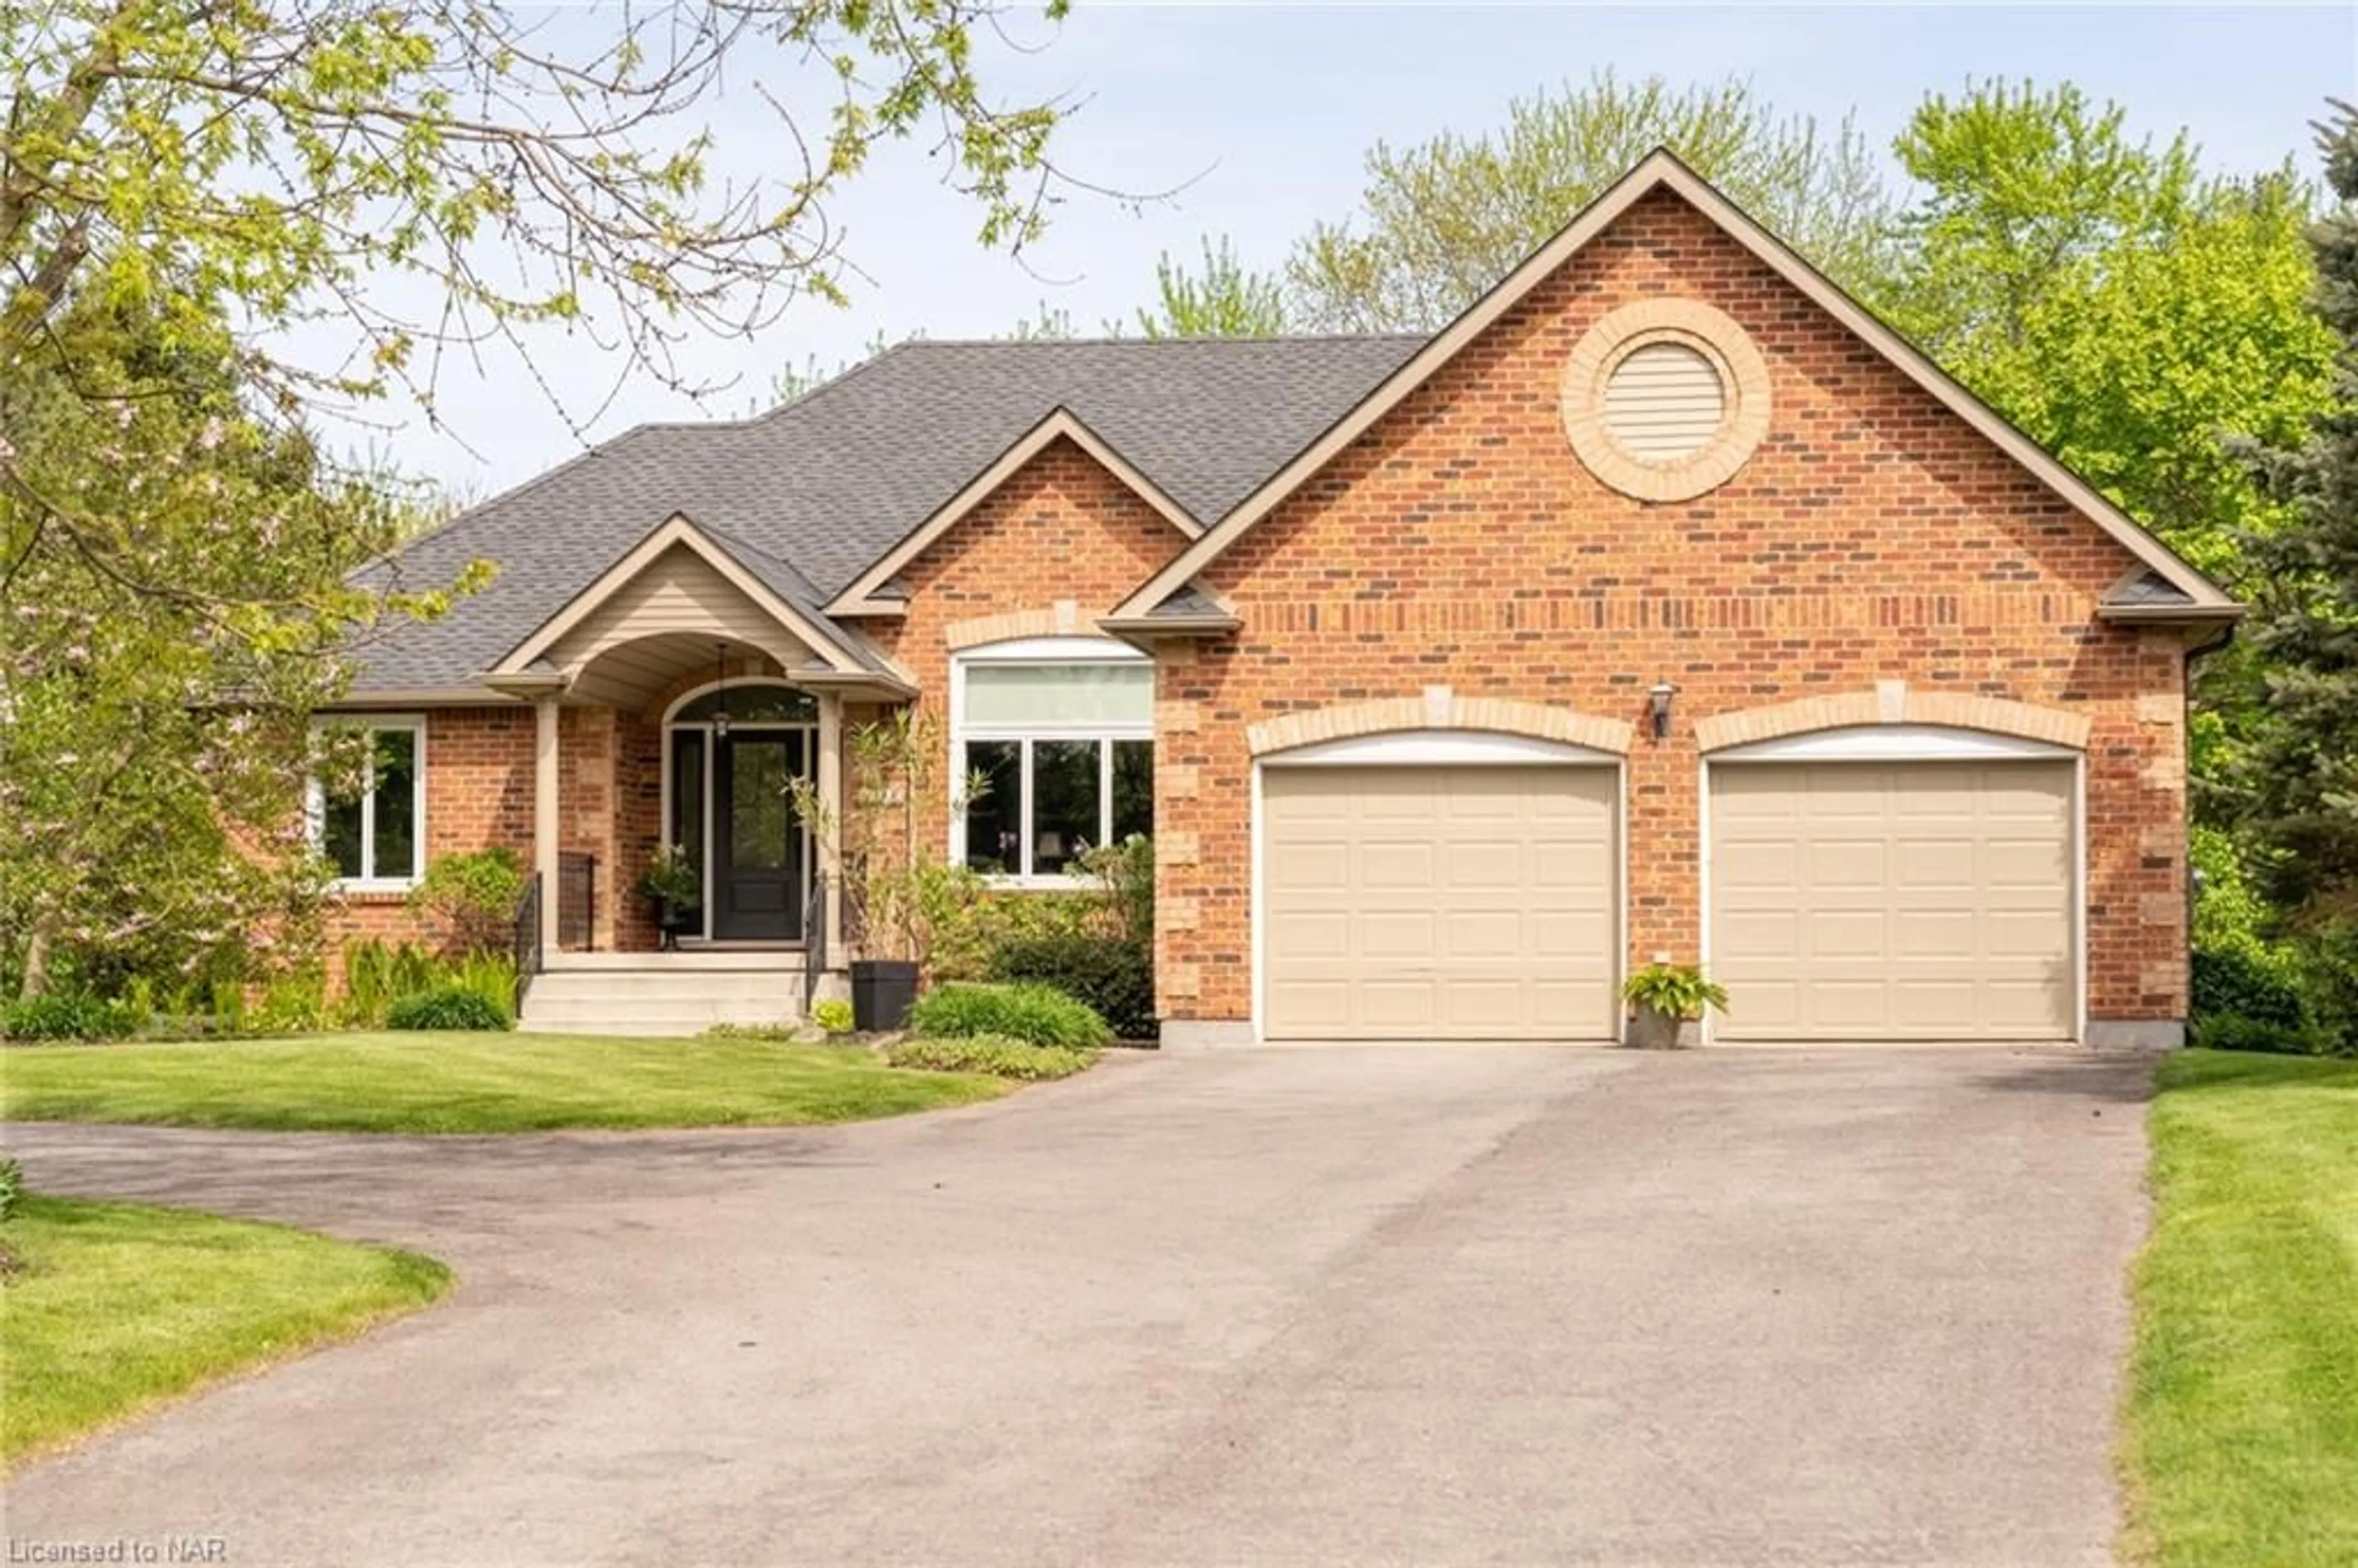 Home with brick exterior material for 1319 Effingham St, Ridgeville Ontario L0S 1M0